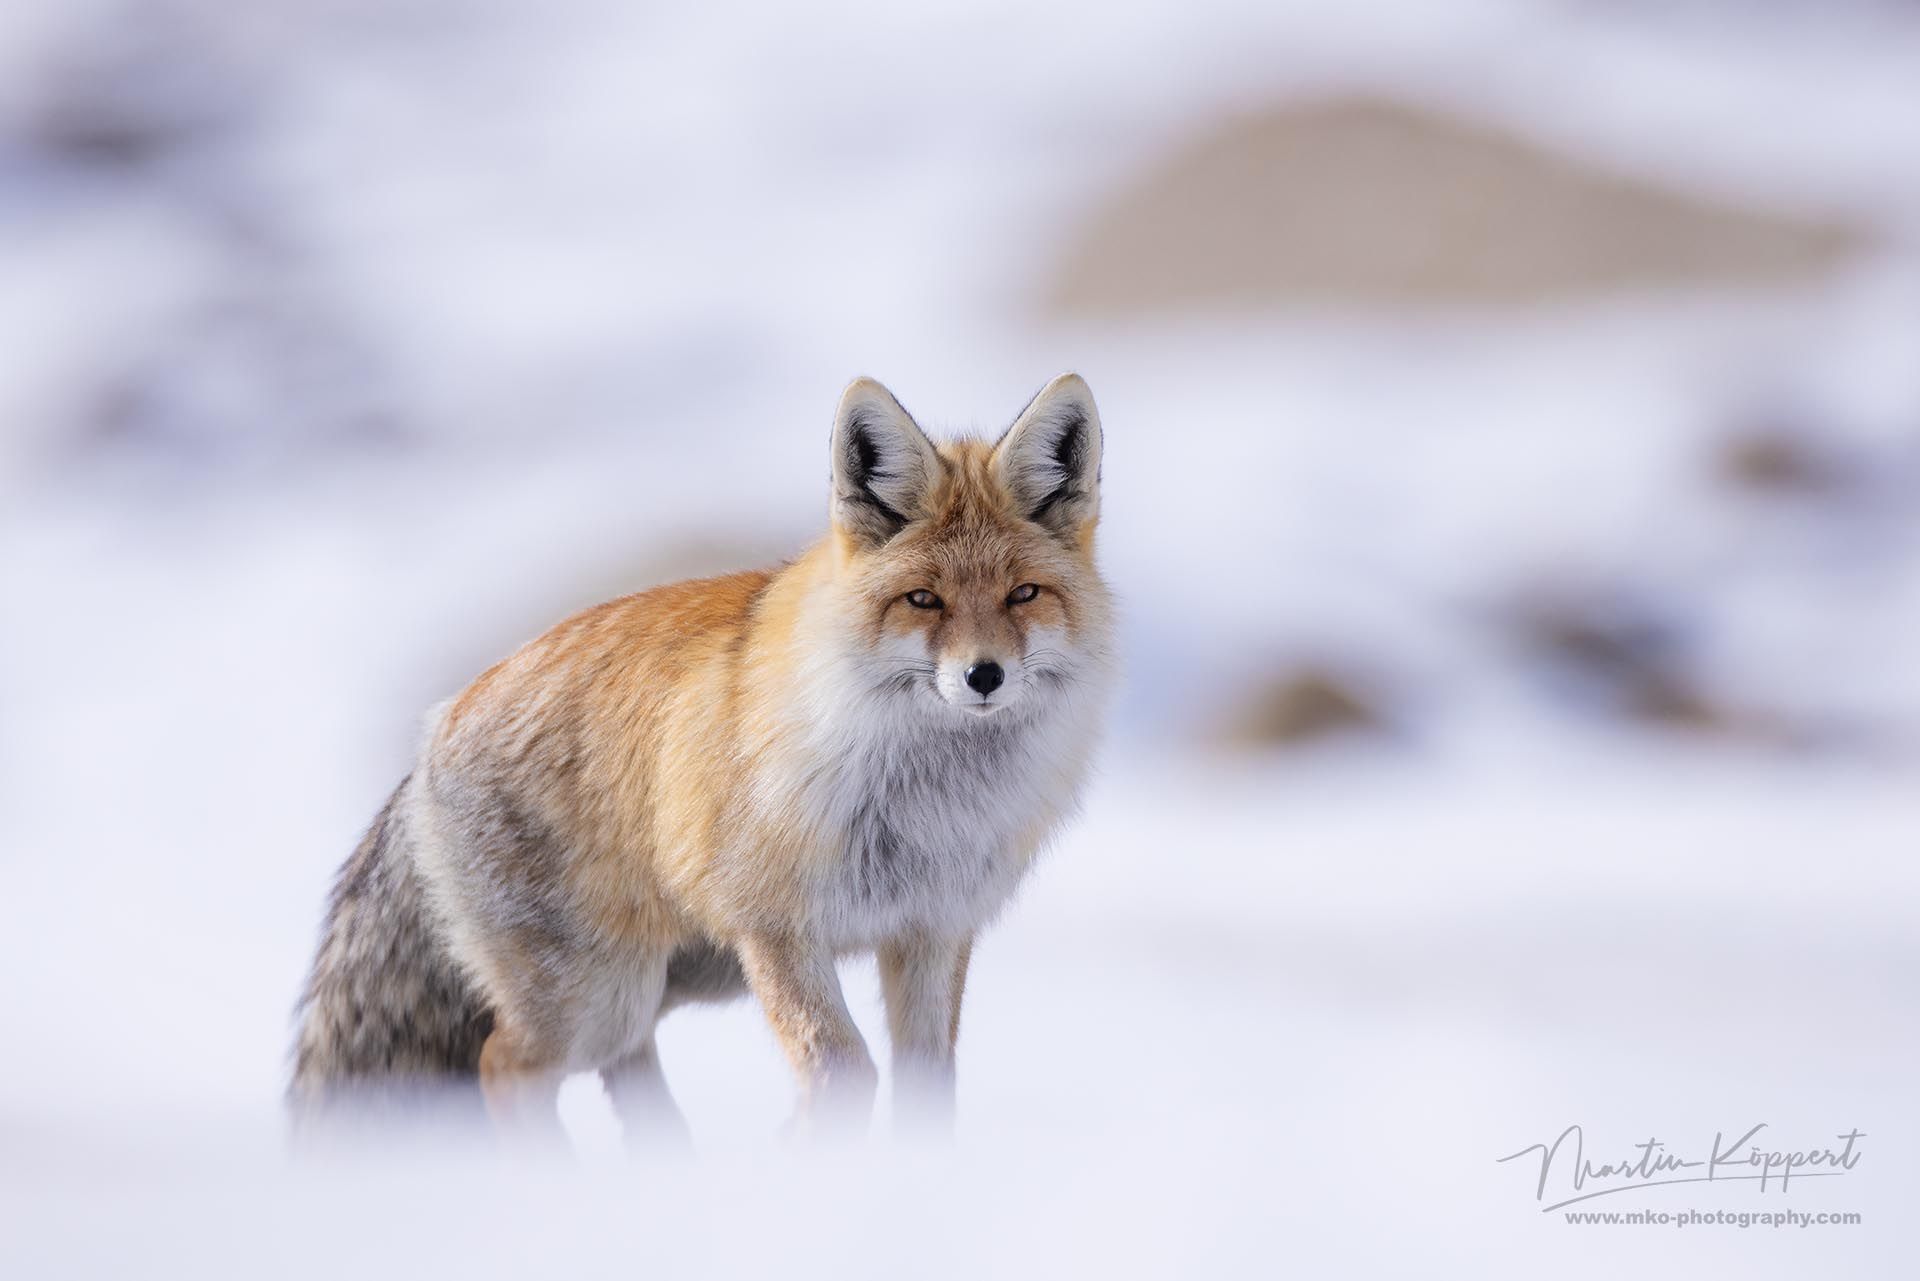 Red_Fox_Chemre_Valley_Ladakh_India